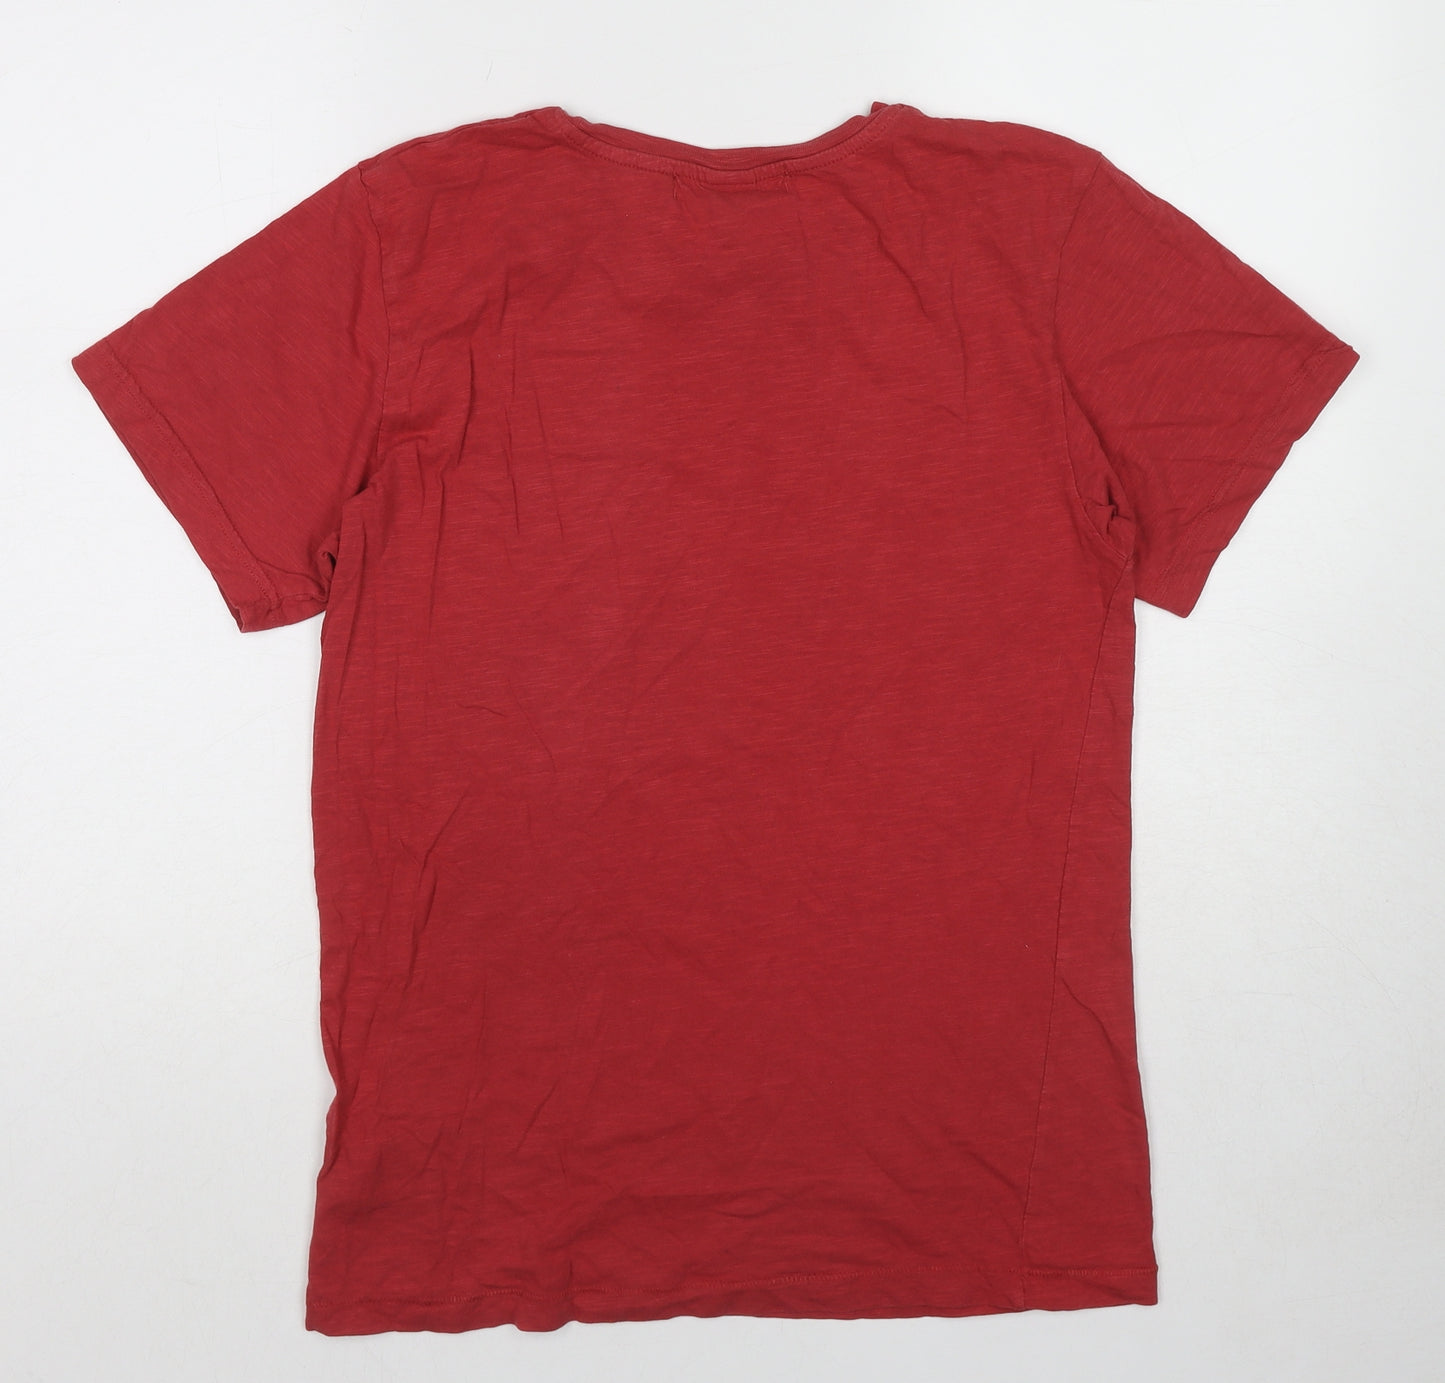 H&M Mens Red Cotton T-Shirt Size S Round Neck - San Francisco